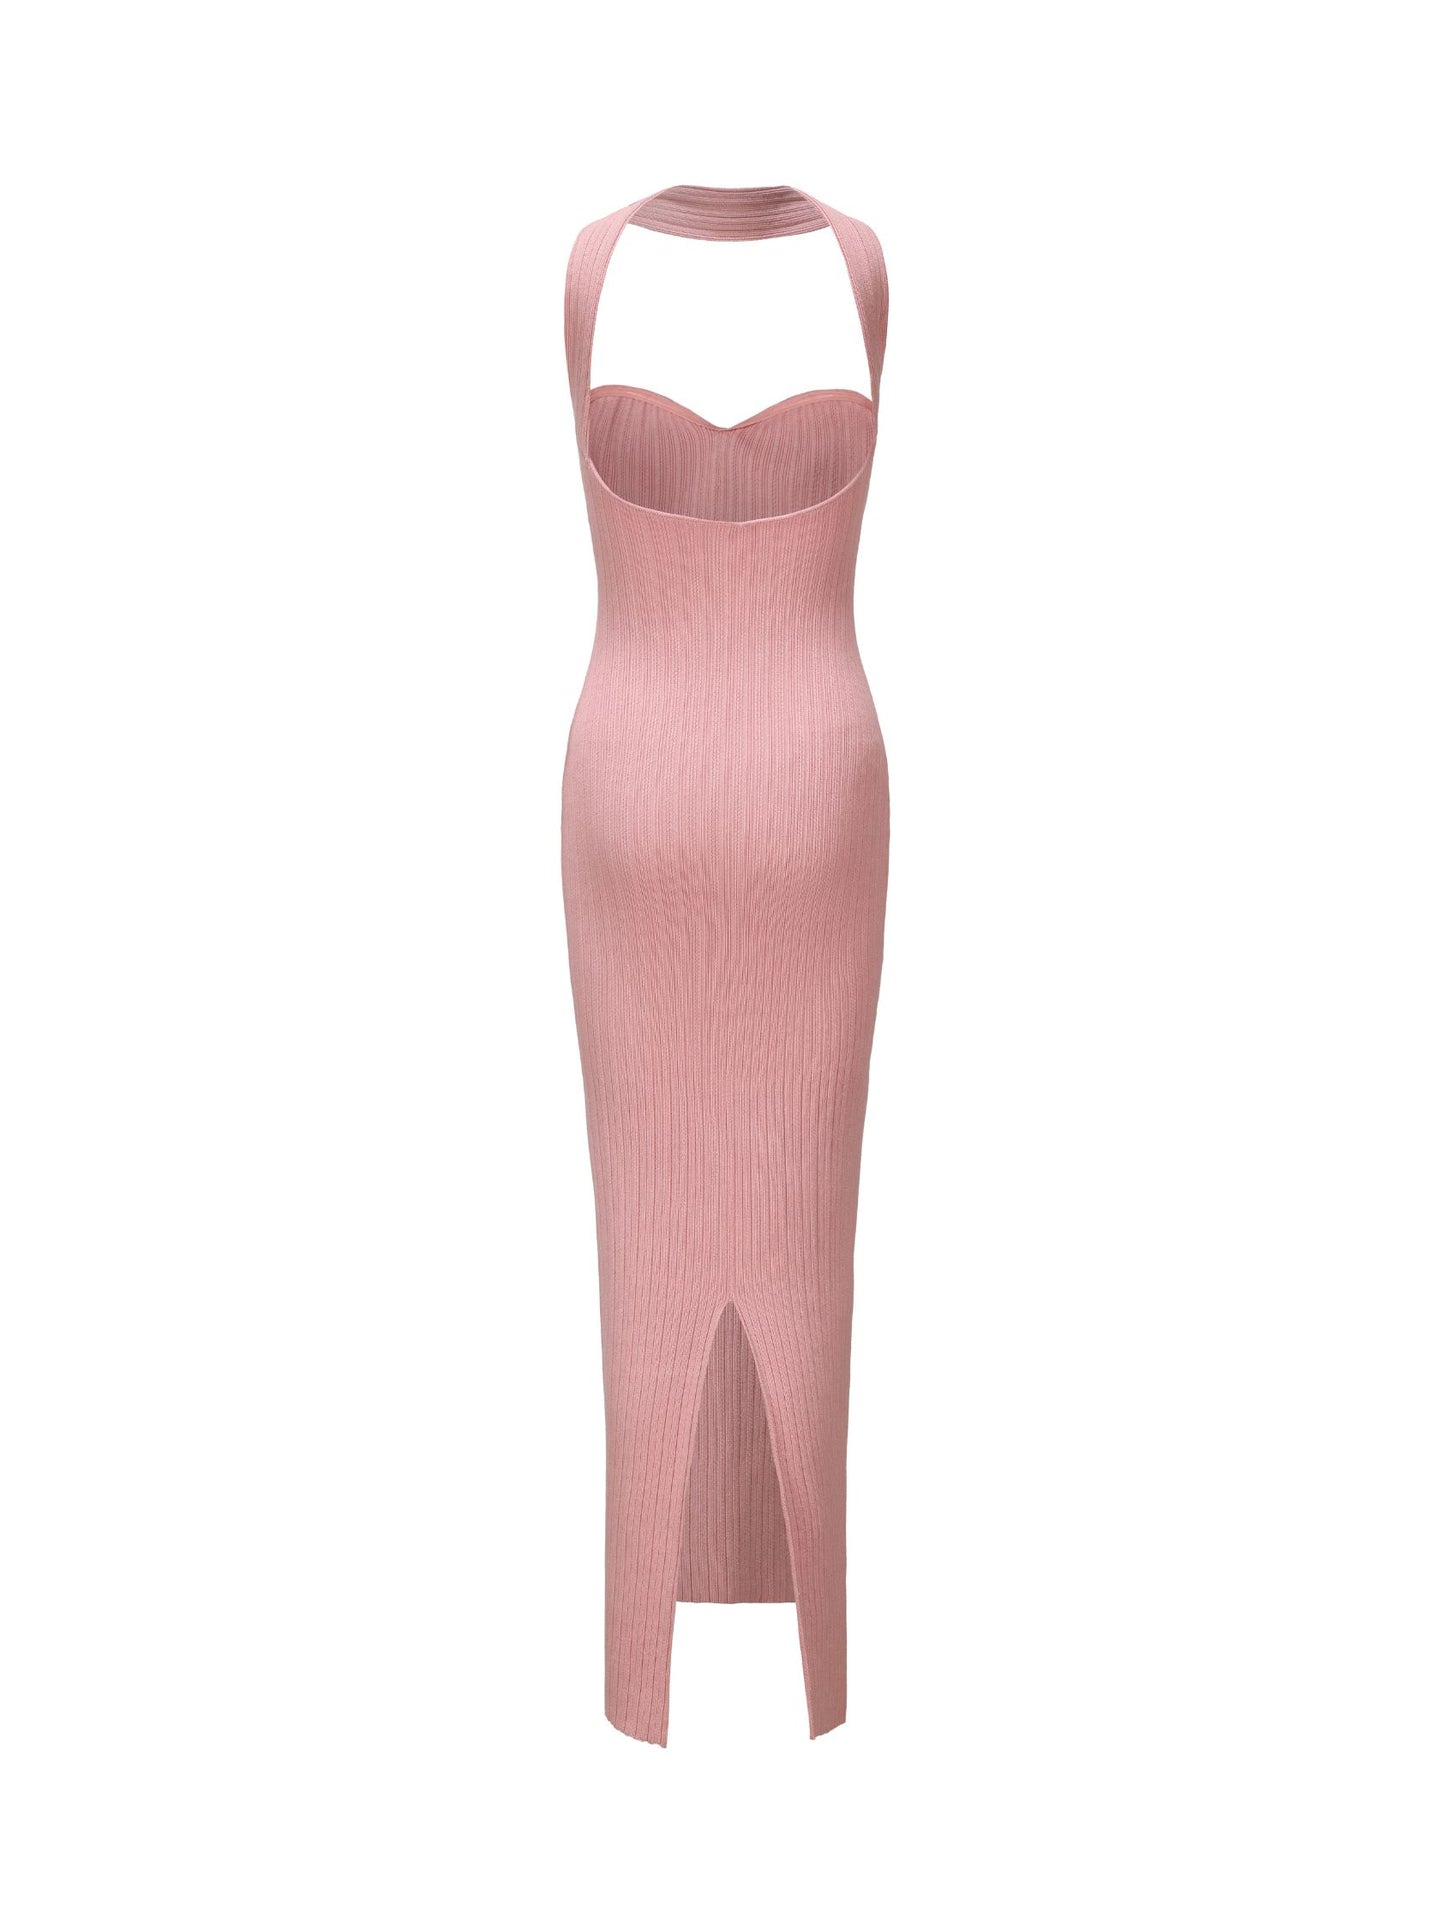 Estelle Knit Dress (Pink)